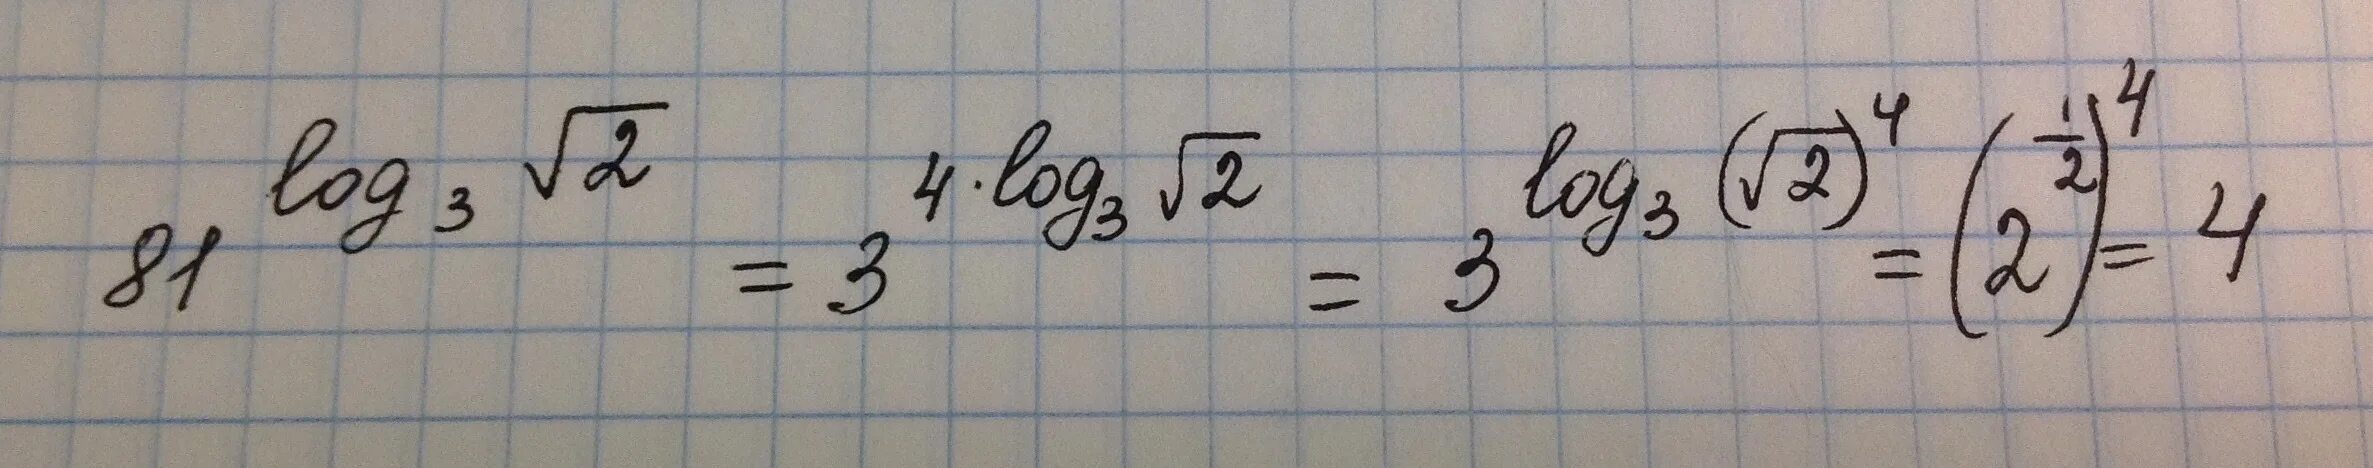 Логарифм по основанию корень из 3. Логарифм по основанию корень из 2. Логарифм корень из 3 по основанию 2. Логарифм корня из трех по основанию три.